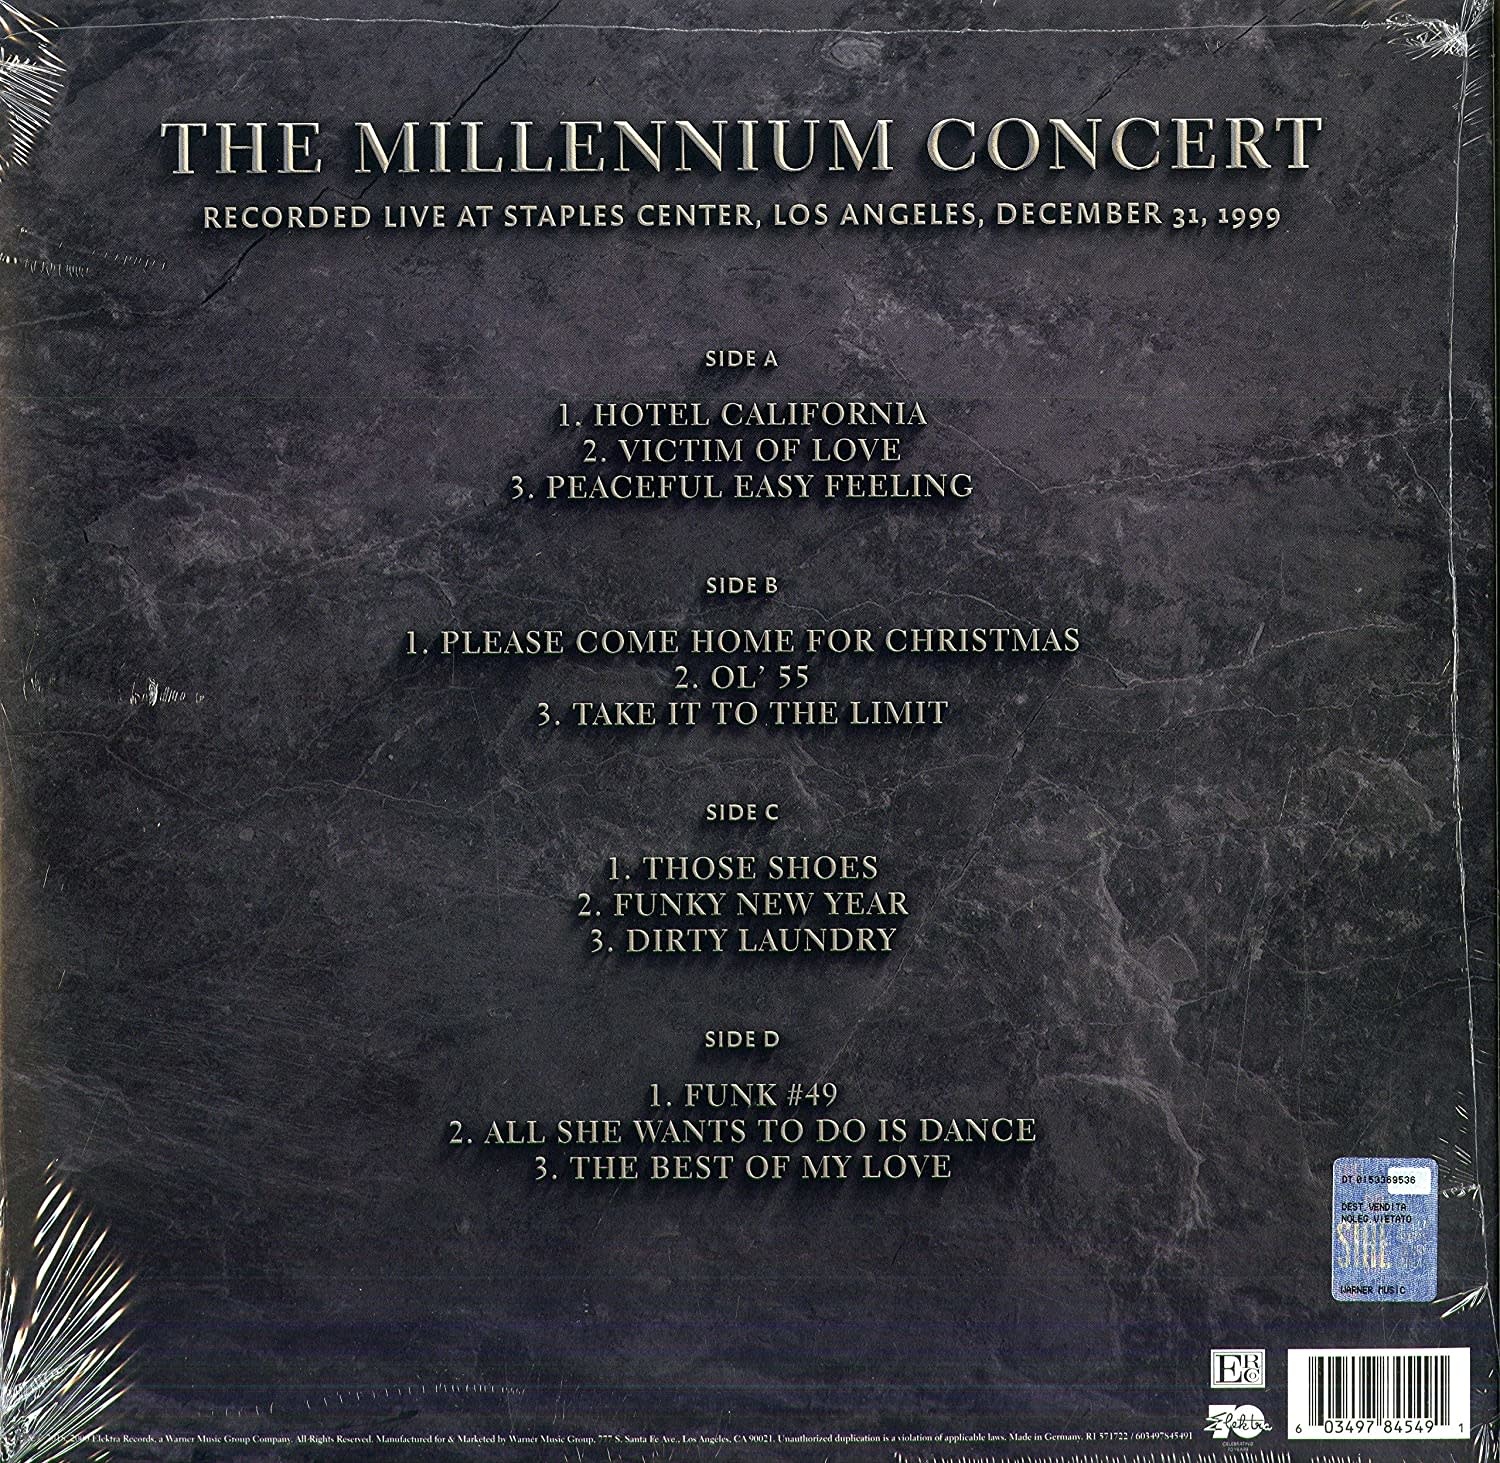 Eagles ‎– The Millennium Concert